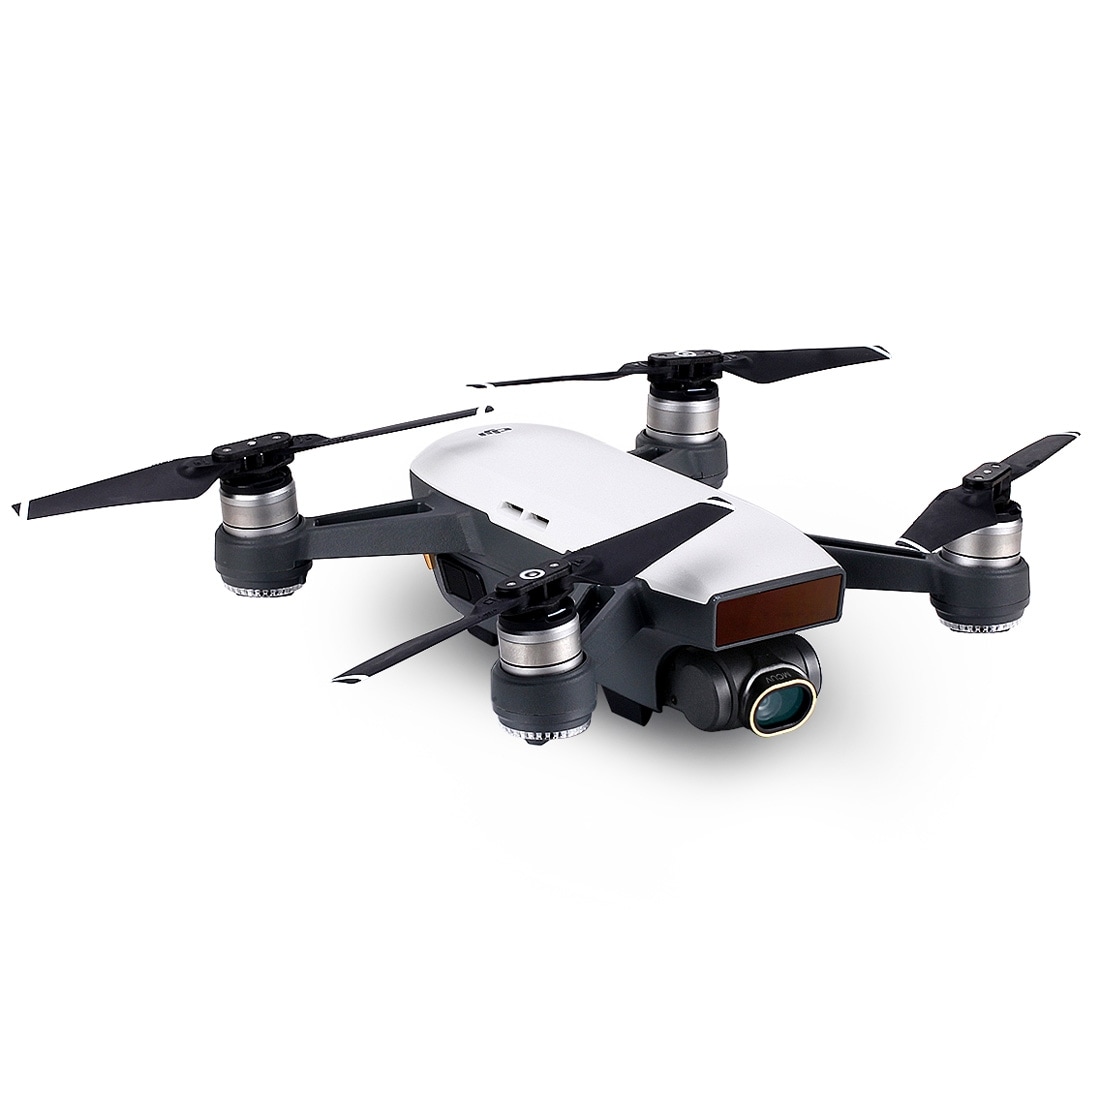 HD Drone MCUV Linse Filter DJI Spark